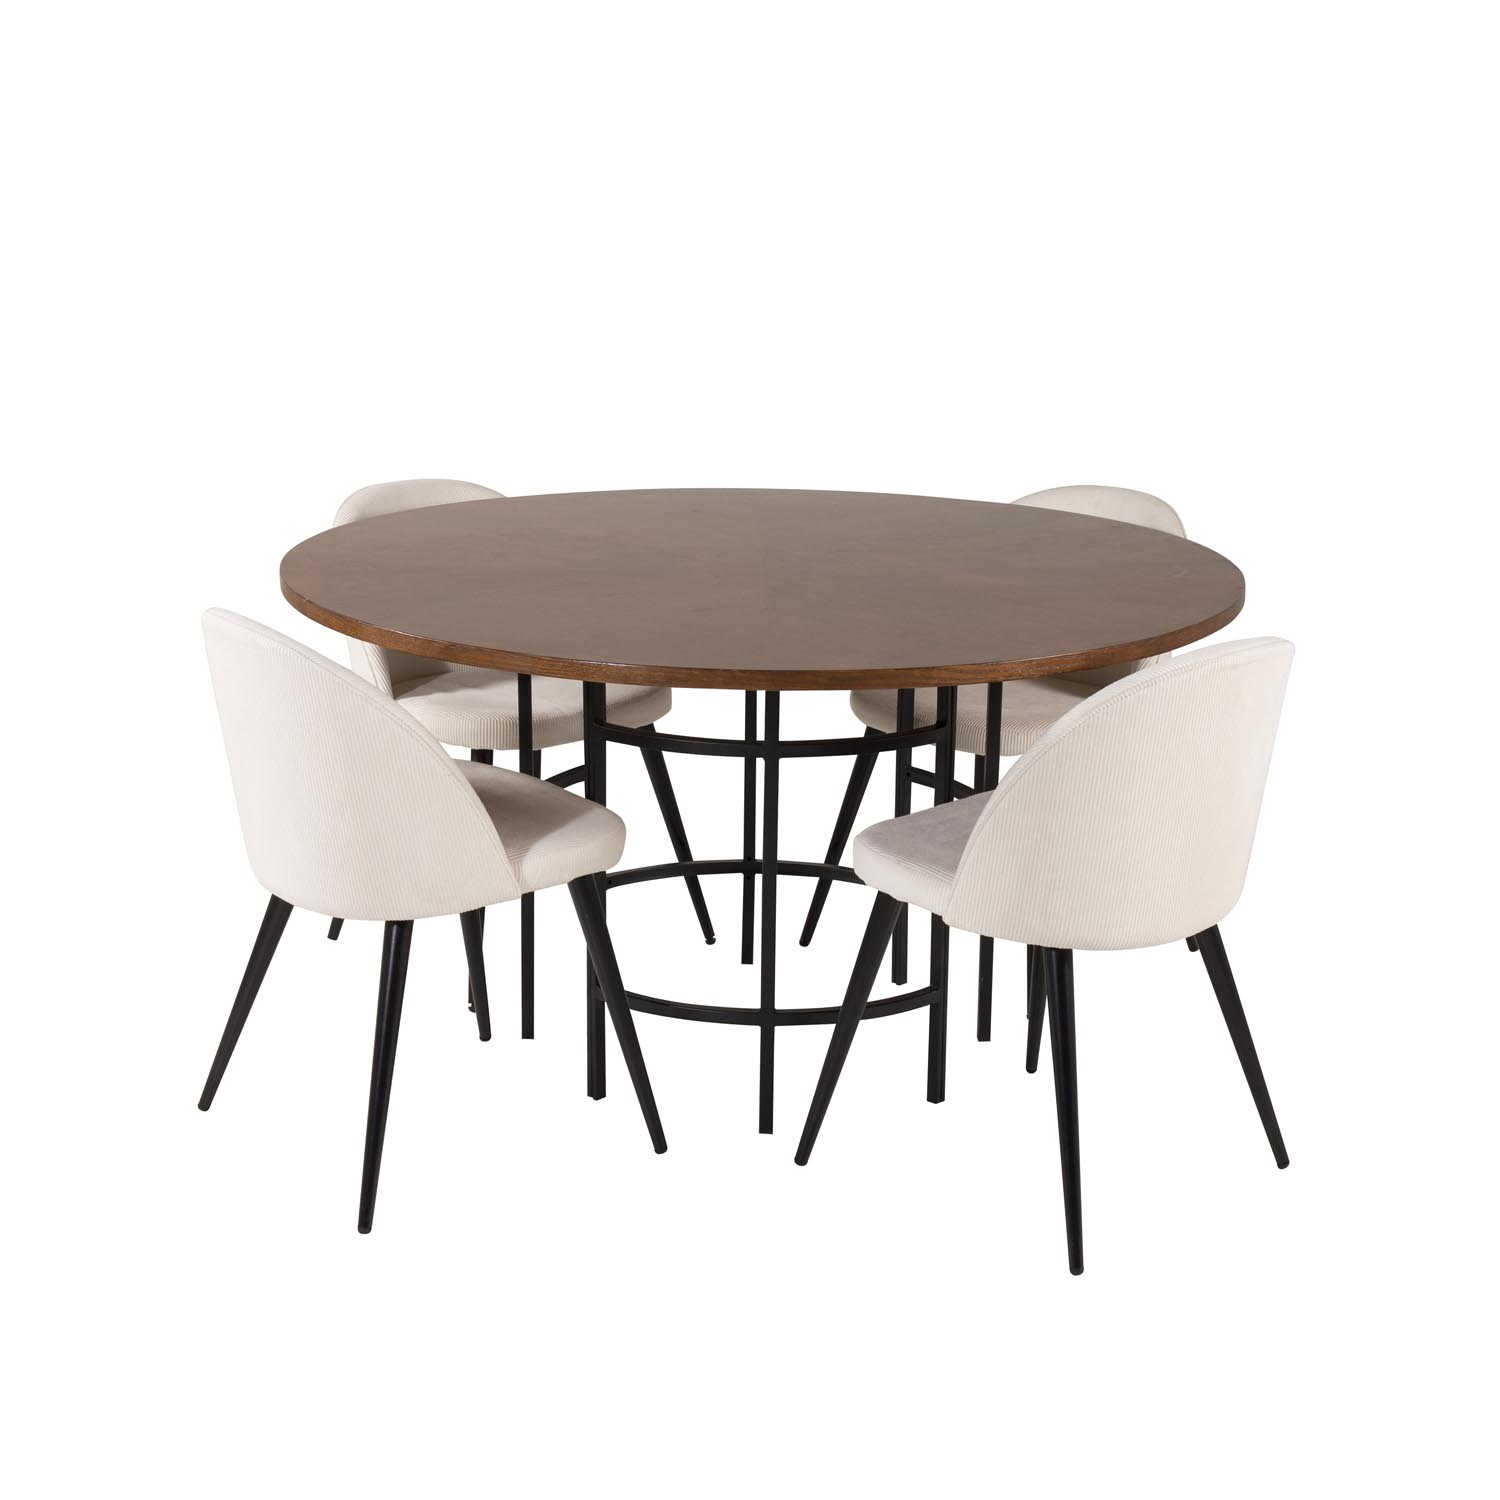 VENTURE DESIGN Copenhagen spisebordssæt, m. 4 stole - brun finer/sort metal, beige fløjl/sort metal